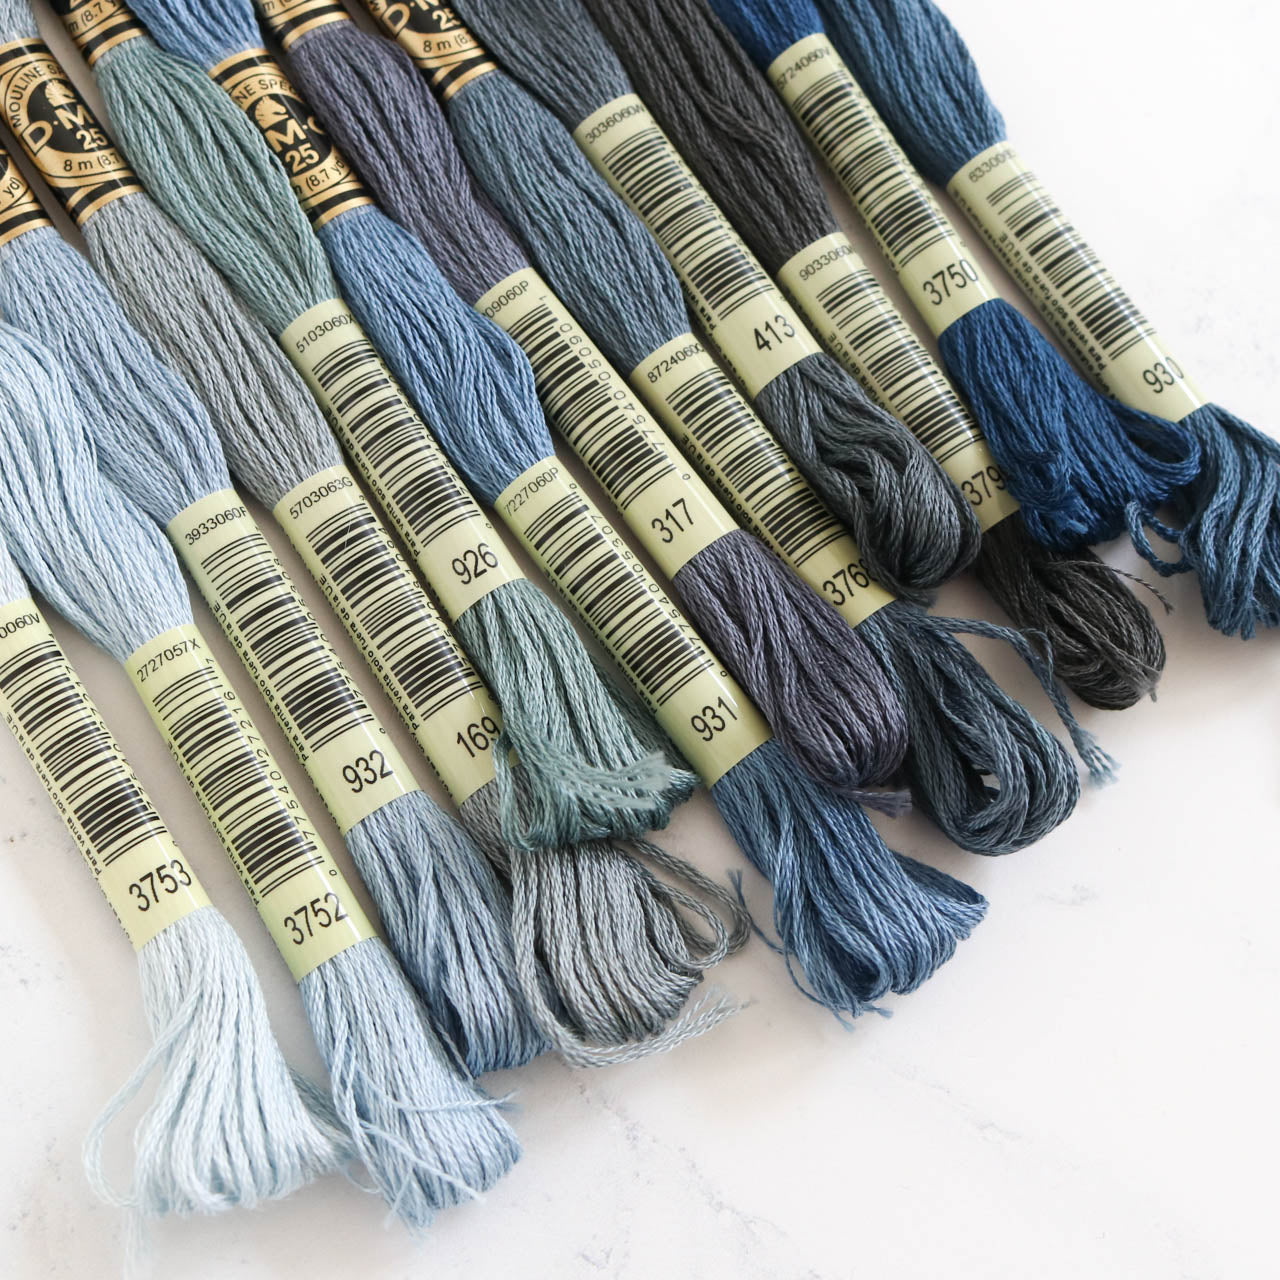 Thread Collection by Stitch People - Denim - Stitched Modern